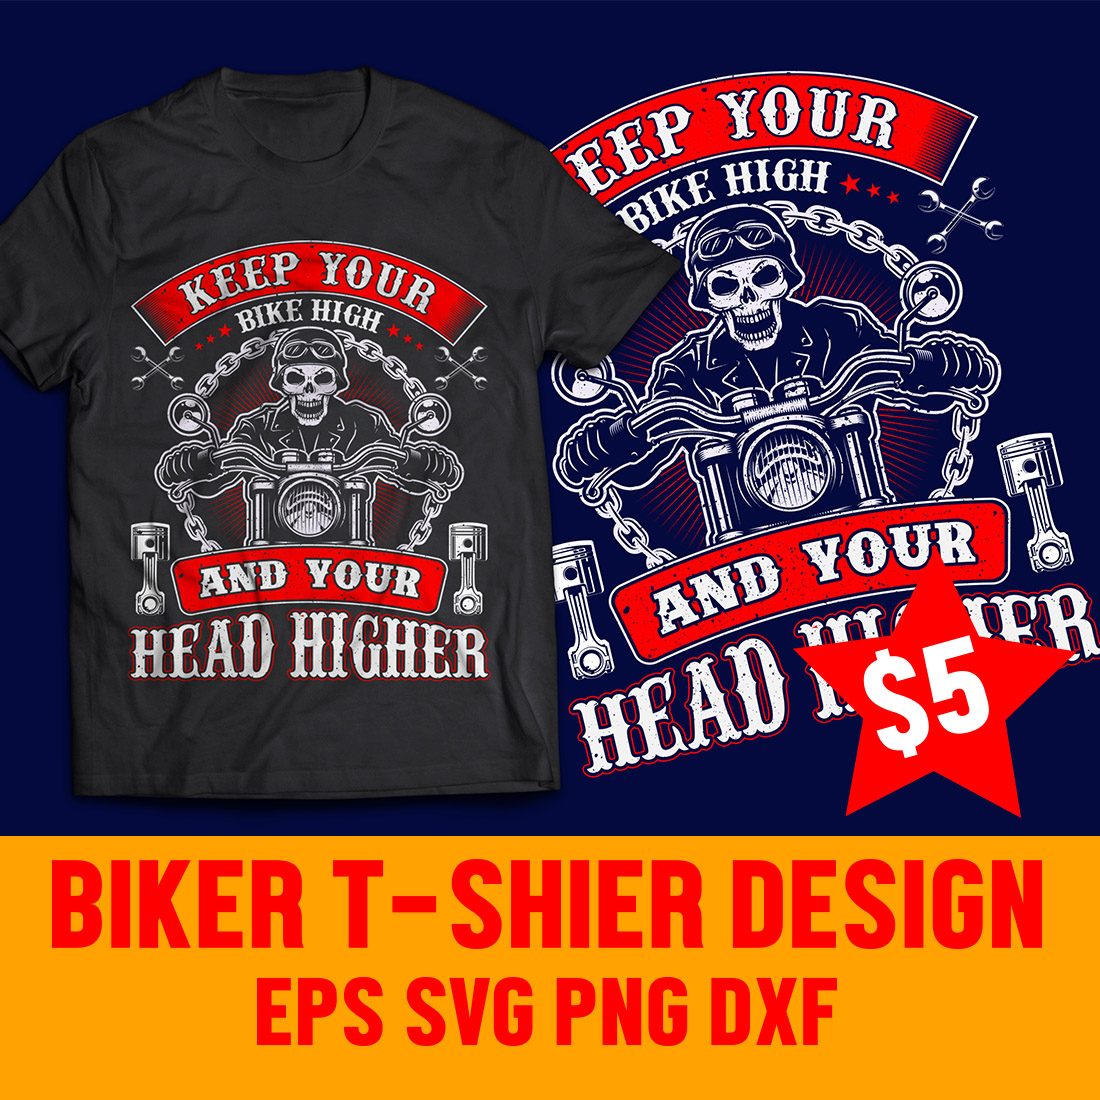 Creative Motorbiker T-shirt Design cover image.